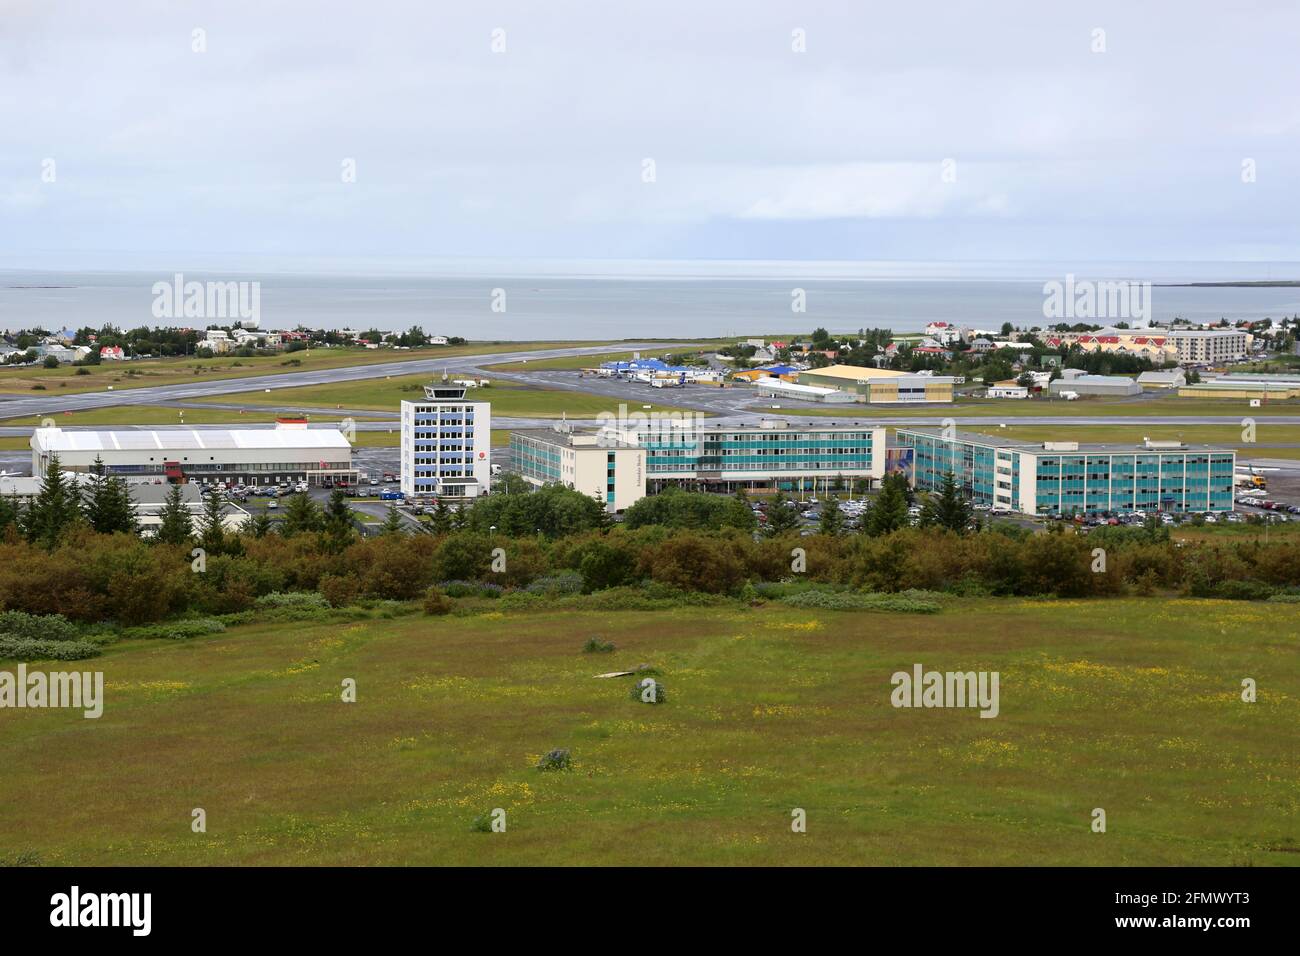 Reykjavik, Iceland – July 4, 2017: Overview of Reykjavik airport (RKV) in Iceland. Stock Photo